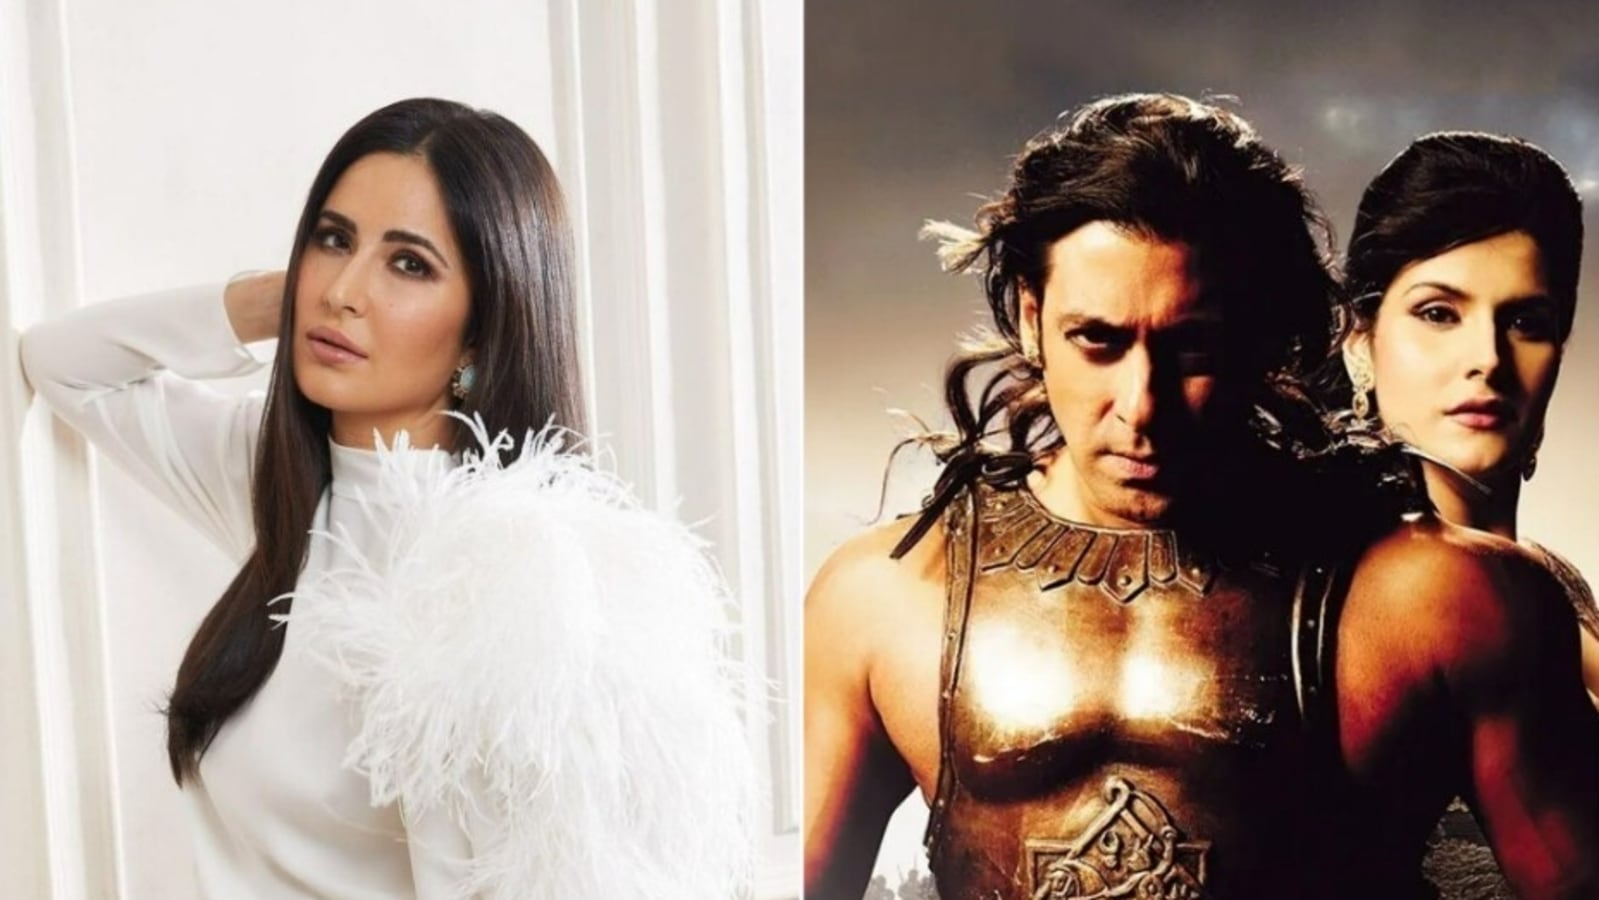 Katrina Vs Salman Xxx - When Katrina Kaif spoke about Salman working with 'girls who look like her'  | Bollywood - Hindustan Times